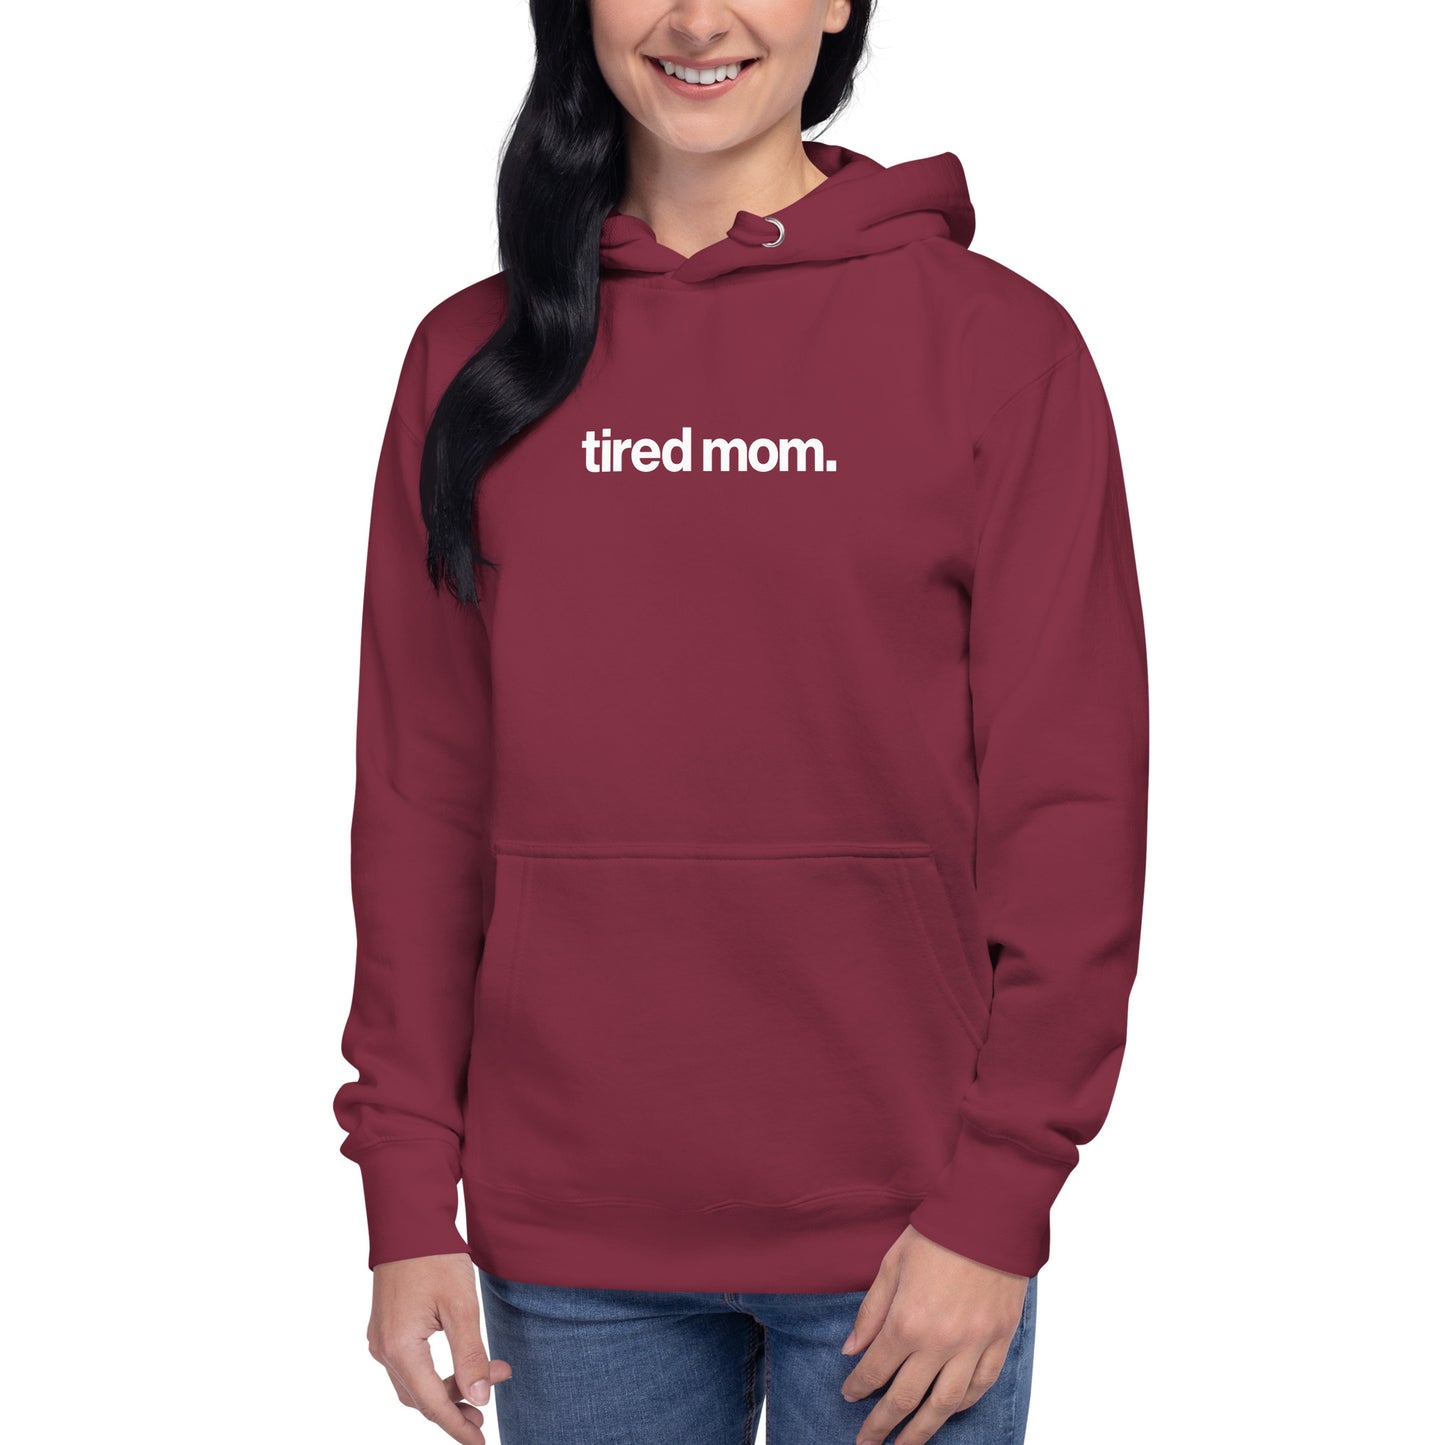 tired mom. hoodie